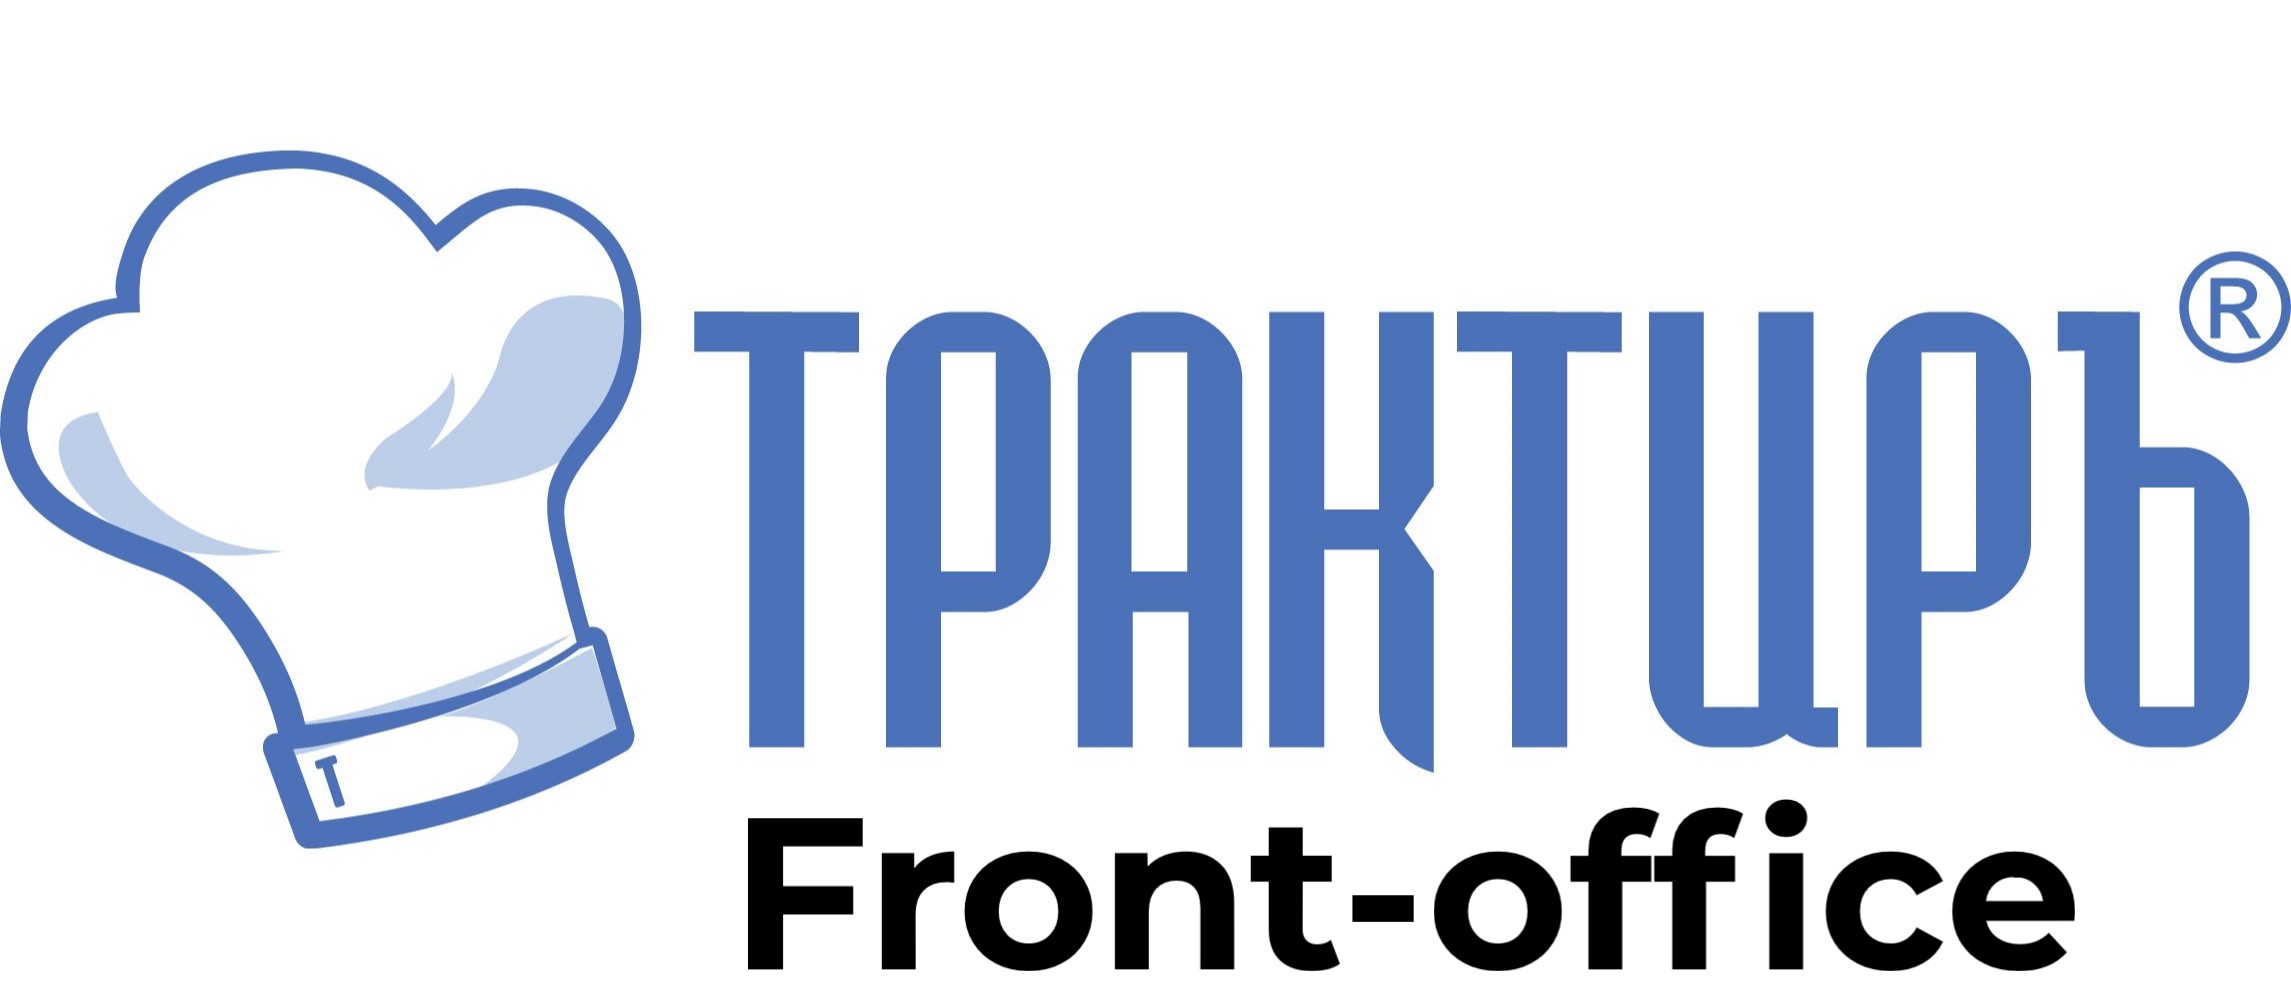 Трактиръ: Front-Office v4.5  Основная поставка в Вологде